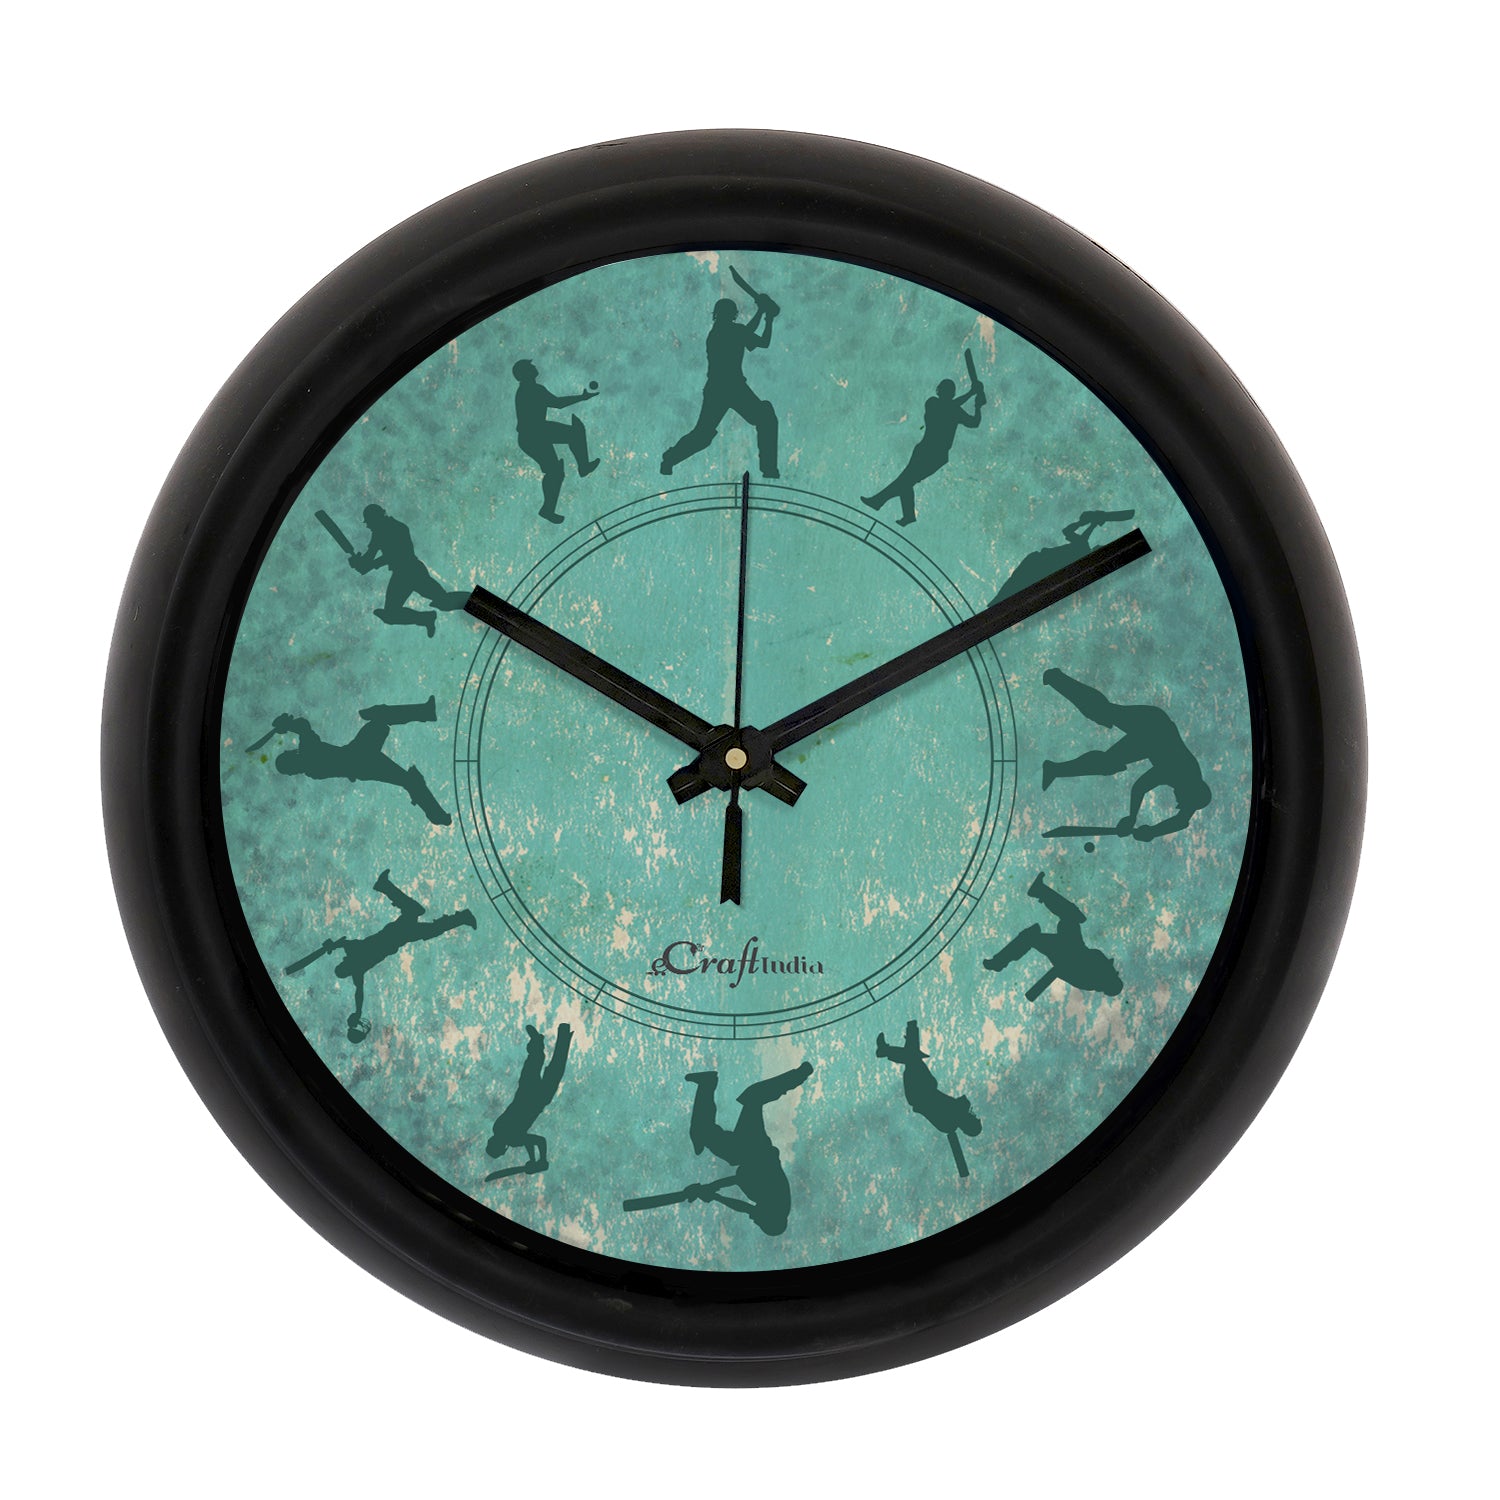 "Cricket Theme" Designer Round Analog Black Wall Clock